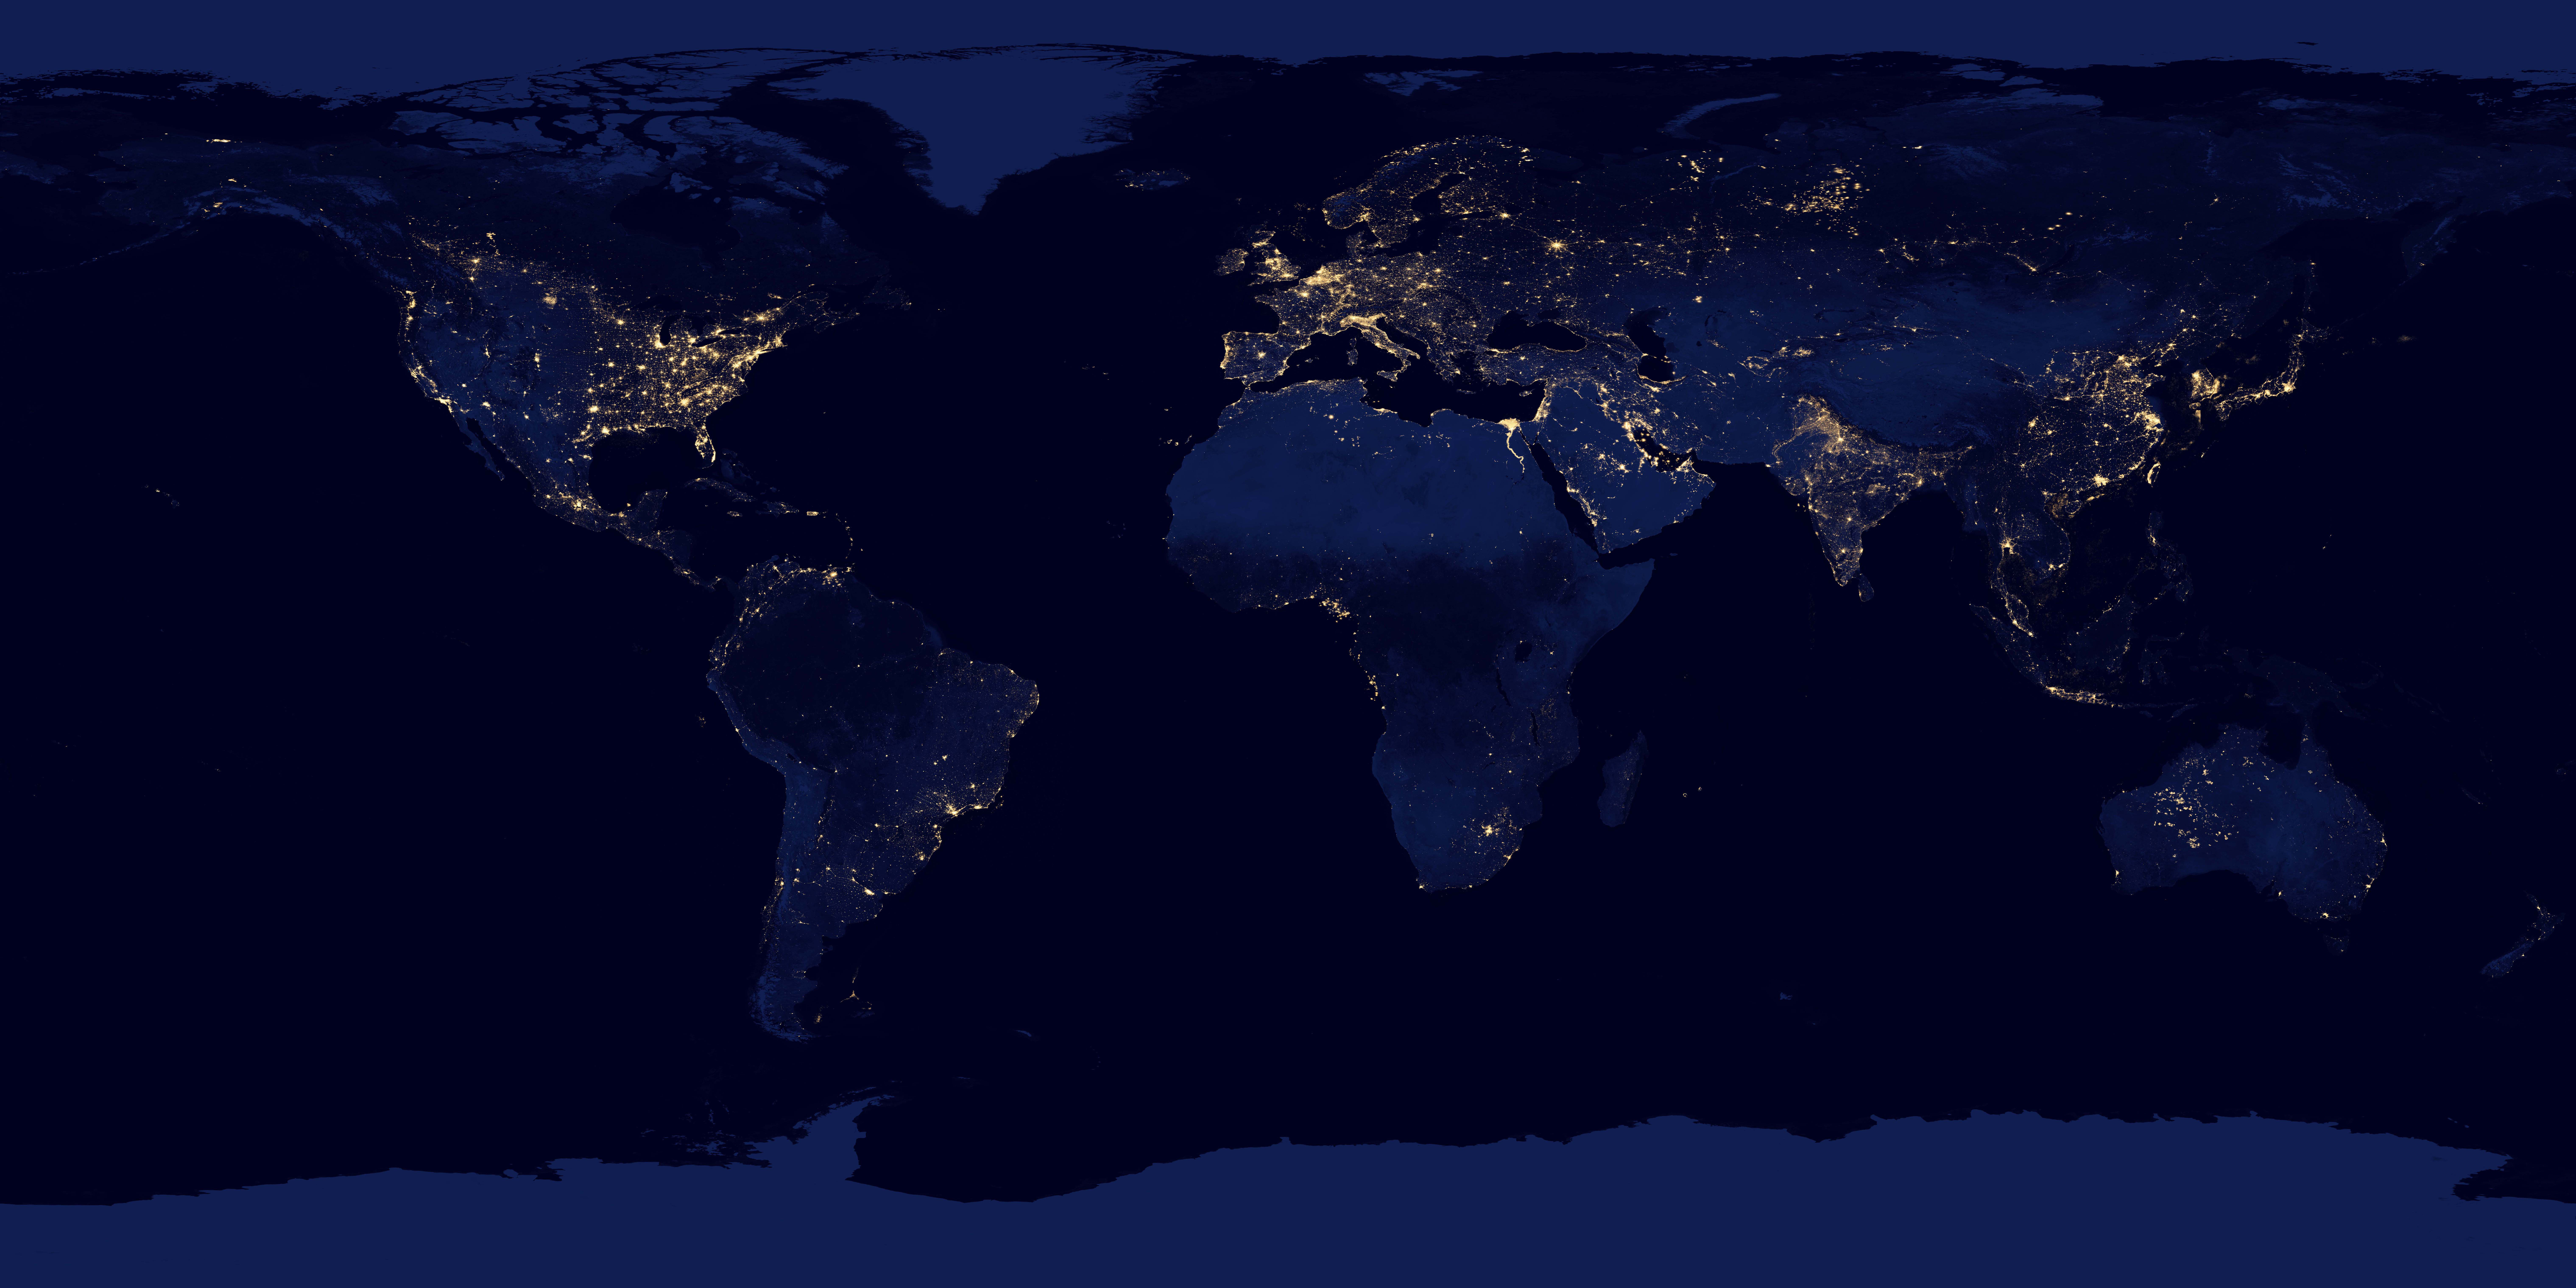 General 12150x6075 Earth continents satellite photo night city lights low light digital art